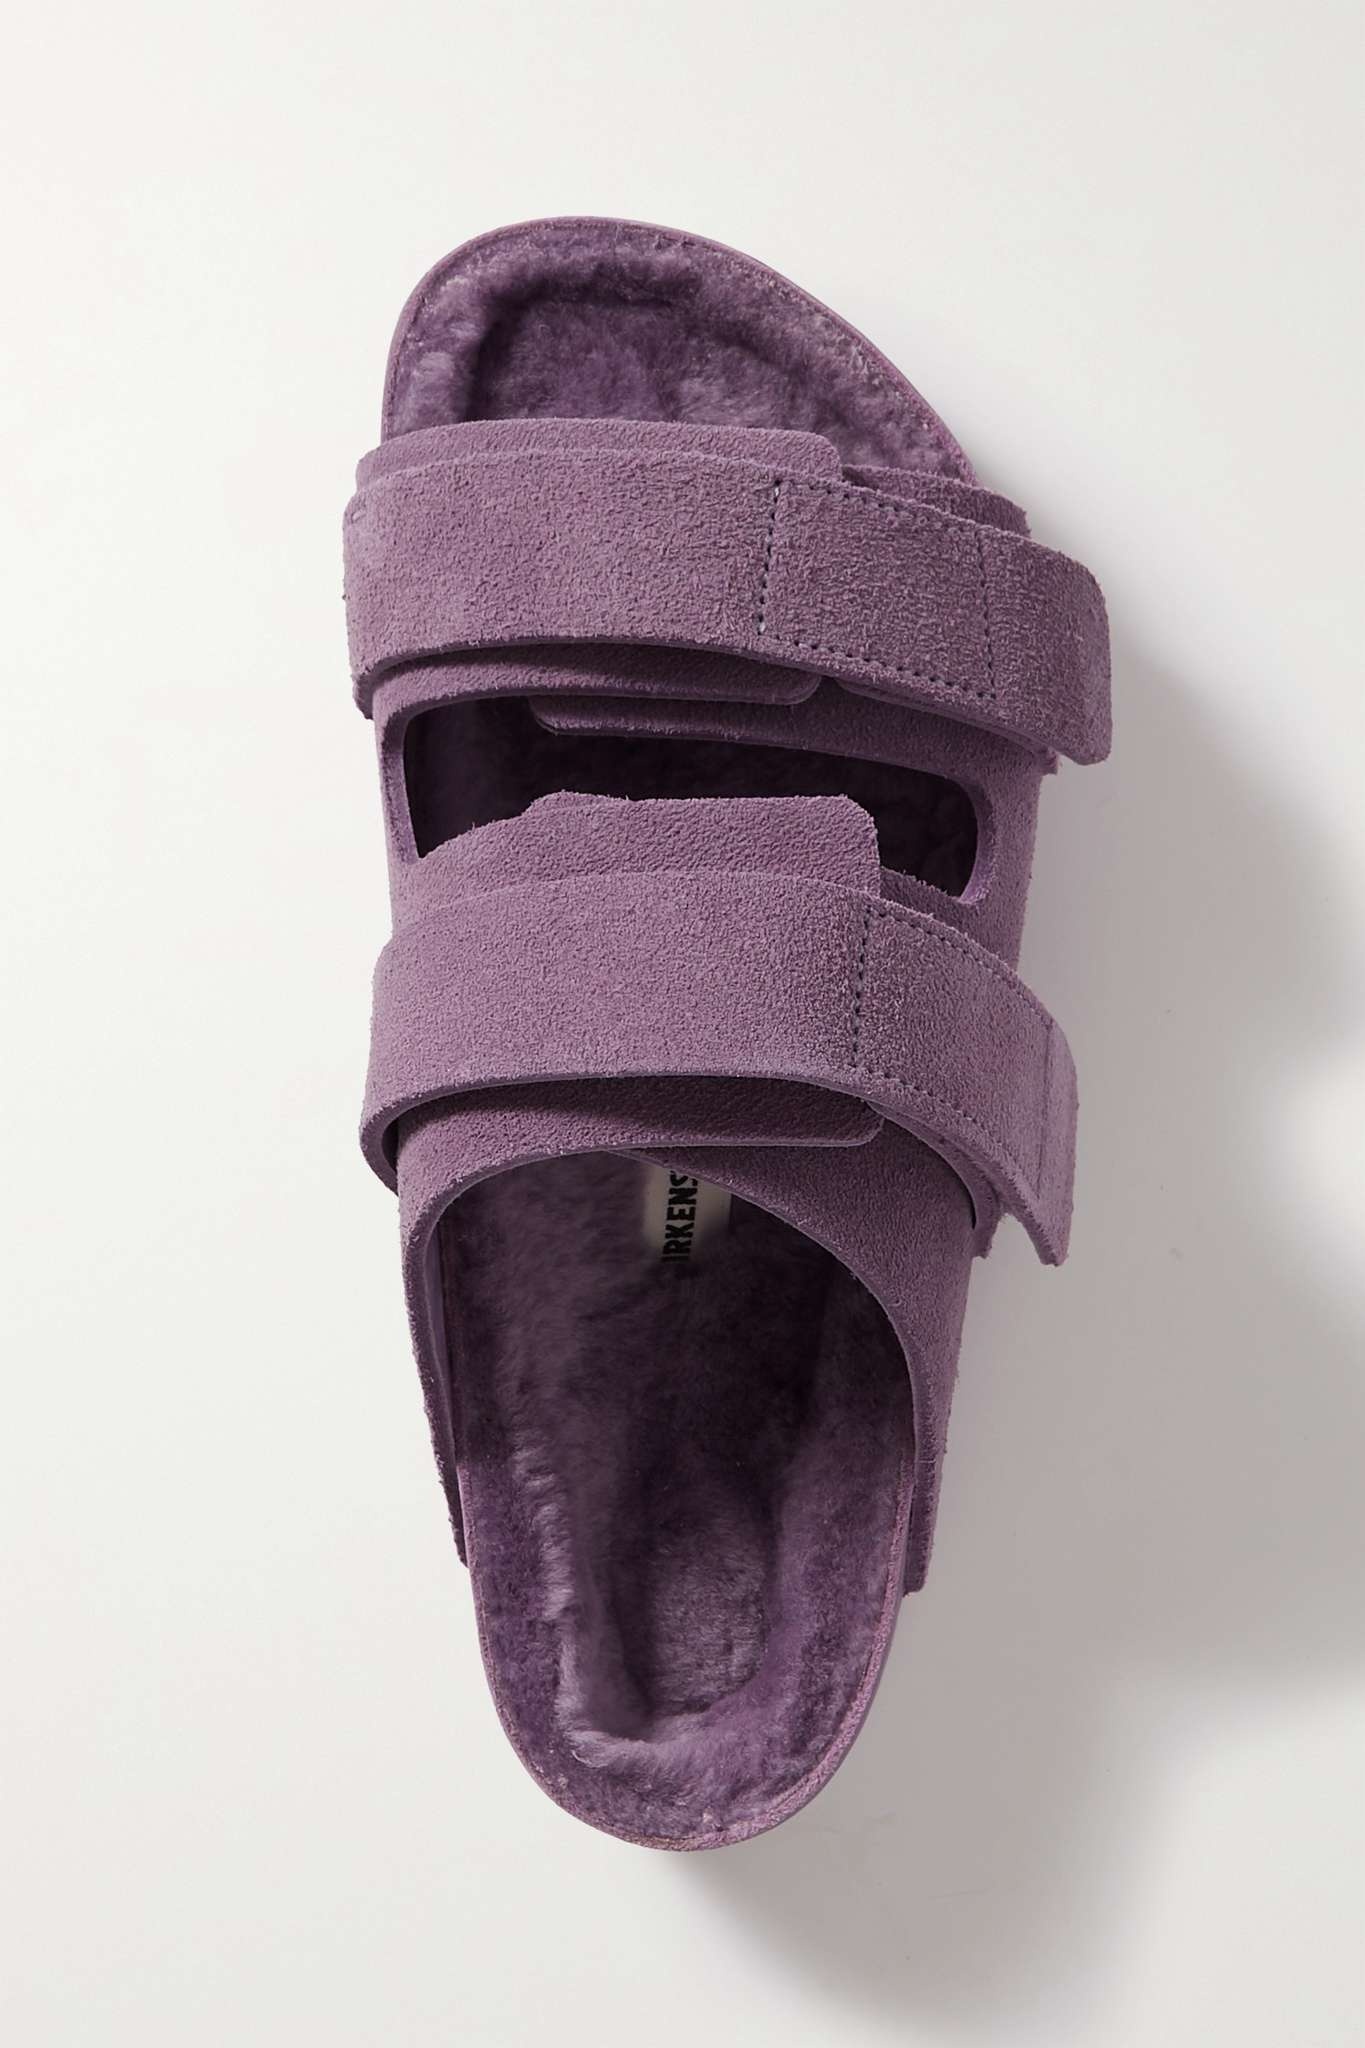 + Tekla Uji shearling-lined suede sandals - 5